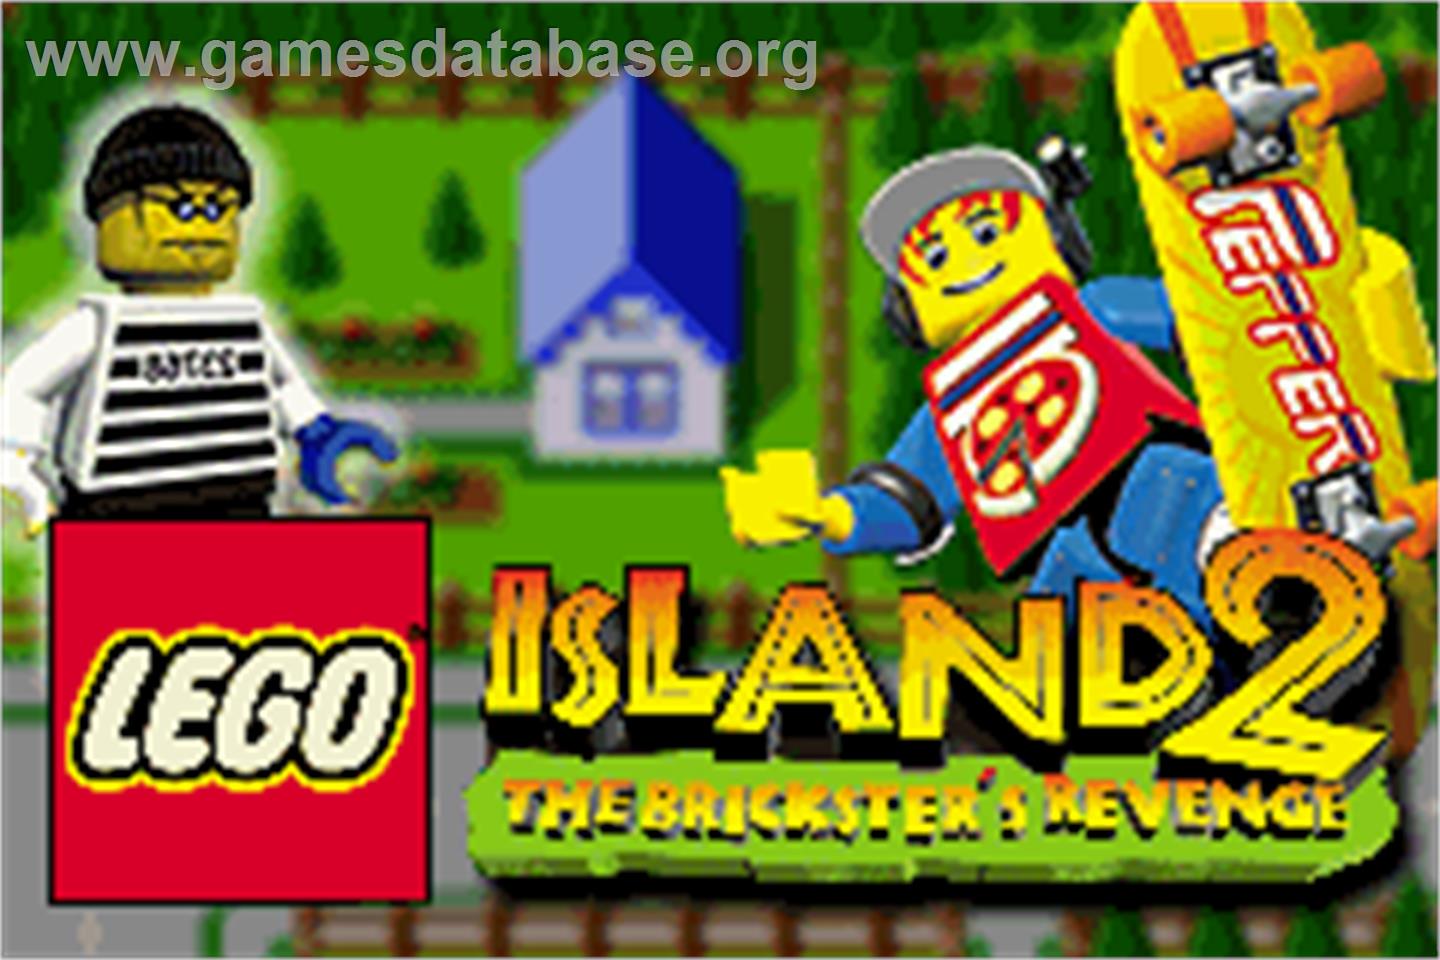 LEGO Island 2: The Brickster's Revenge - Nintendo Game Boy Advance - Artwork - Title Screen